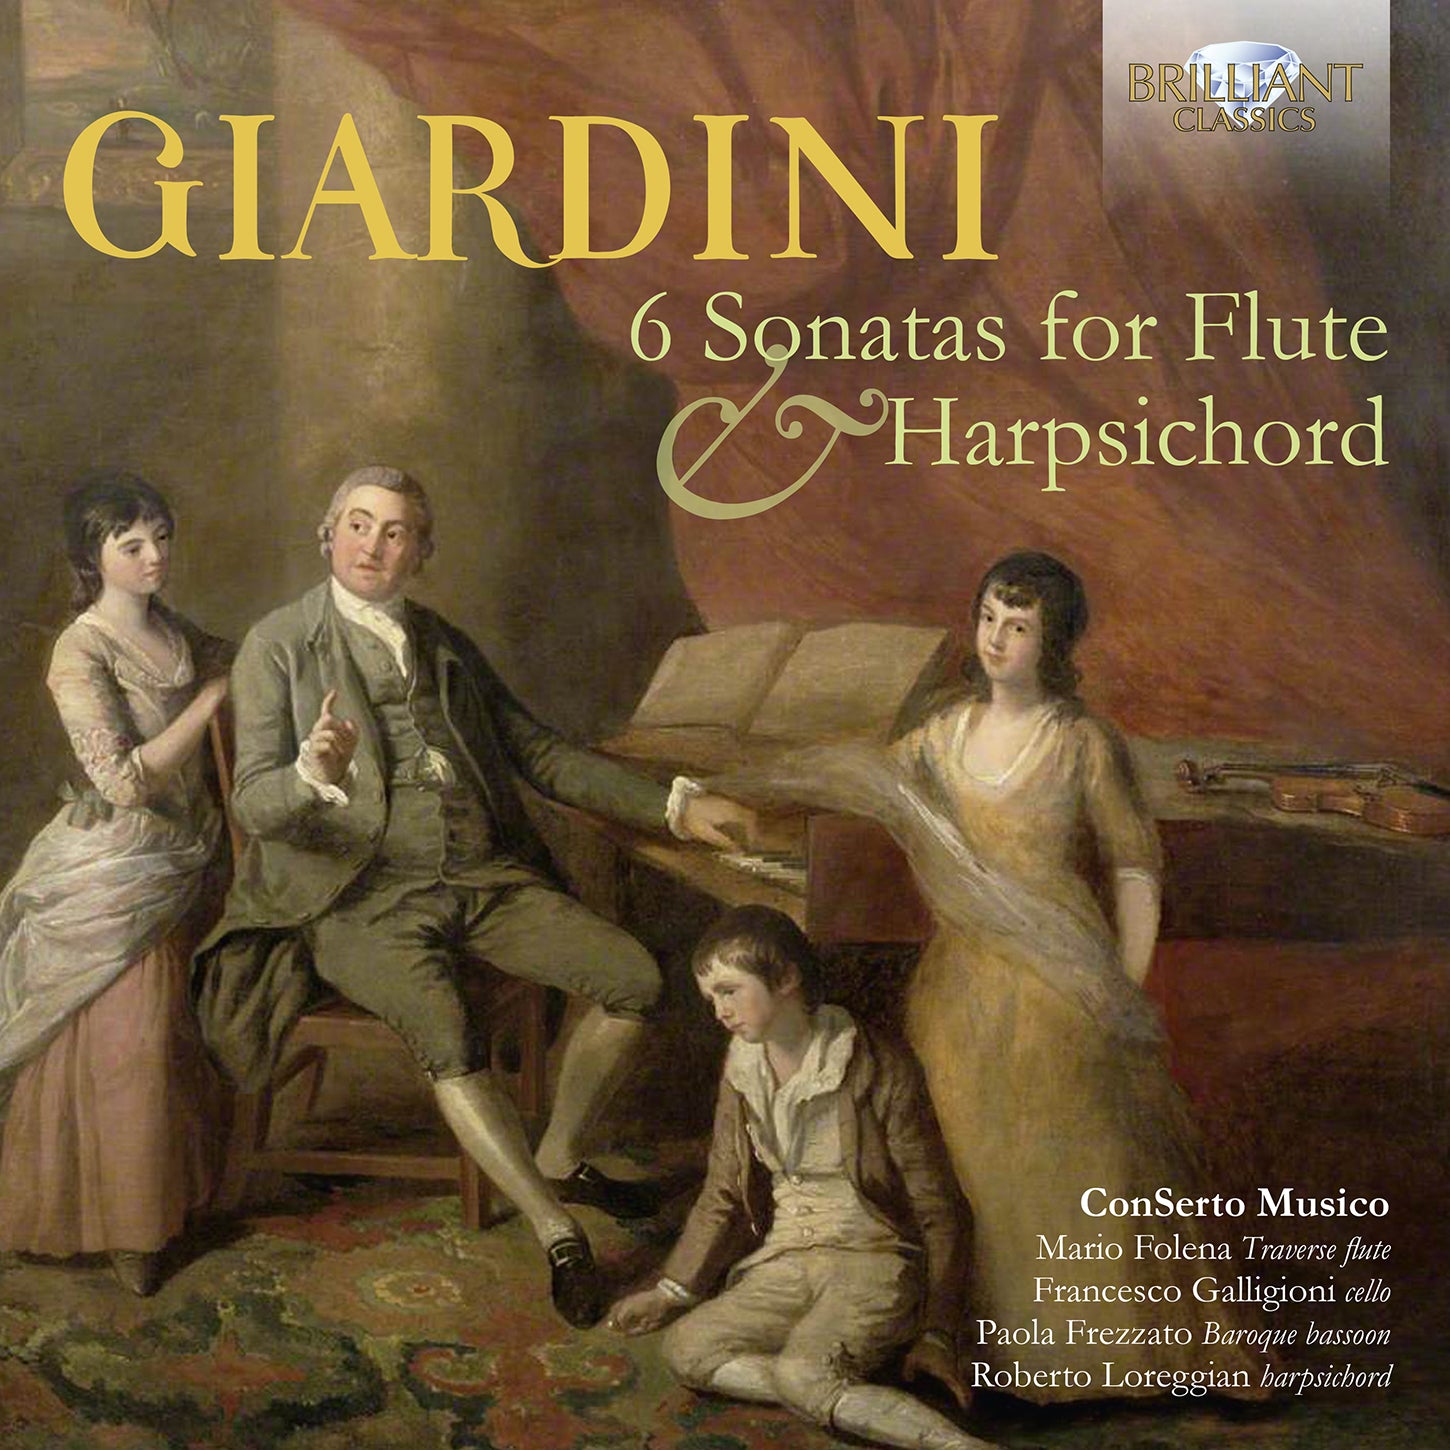 Giardini: 6 Sonatas for Flute & Harpsichord / Ensemble ConSerto Musico